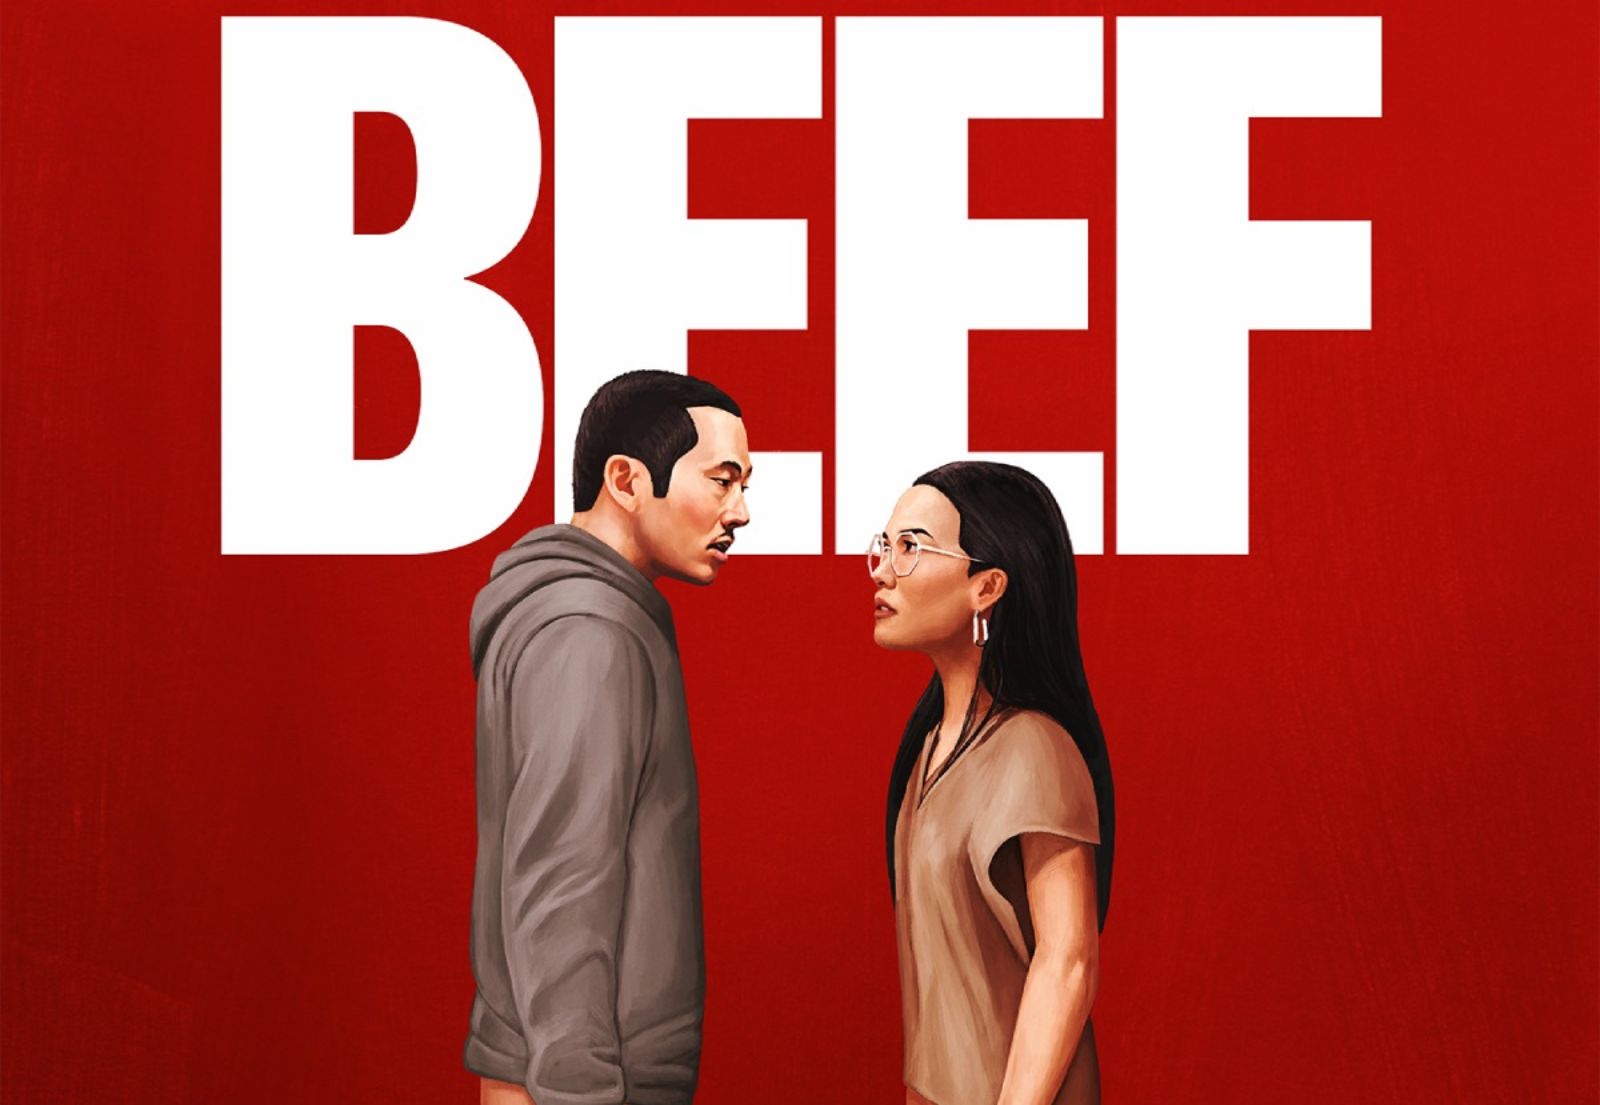 Beef, phim hài kịch, review phim, phim hay, Netflix